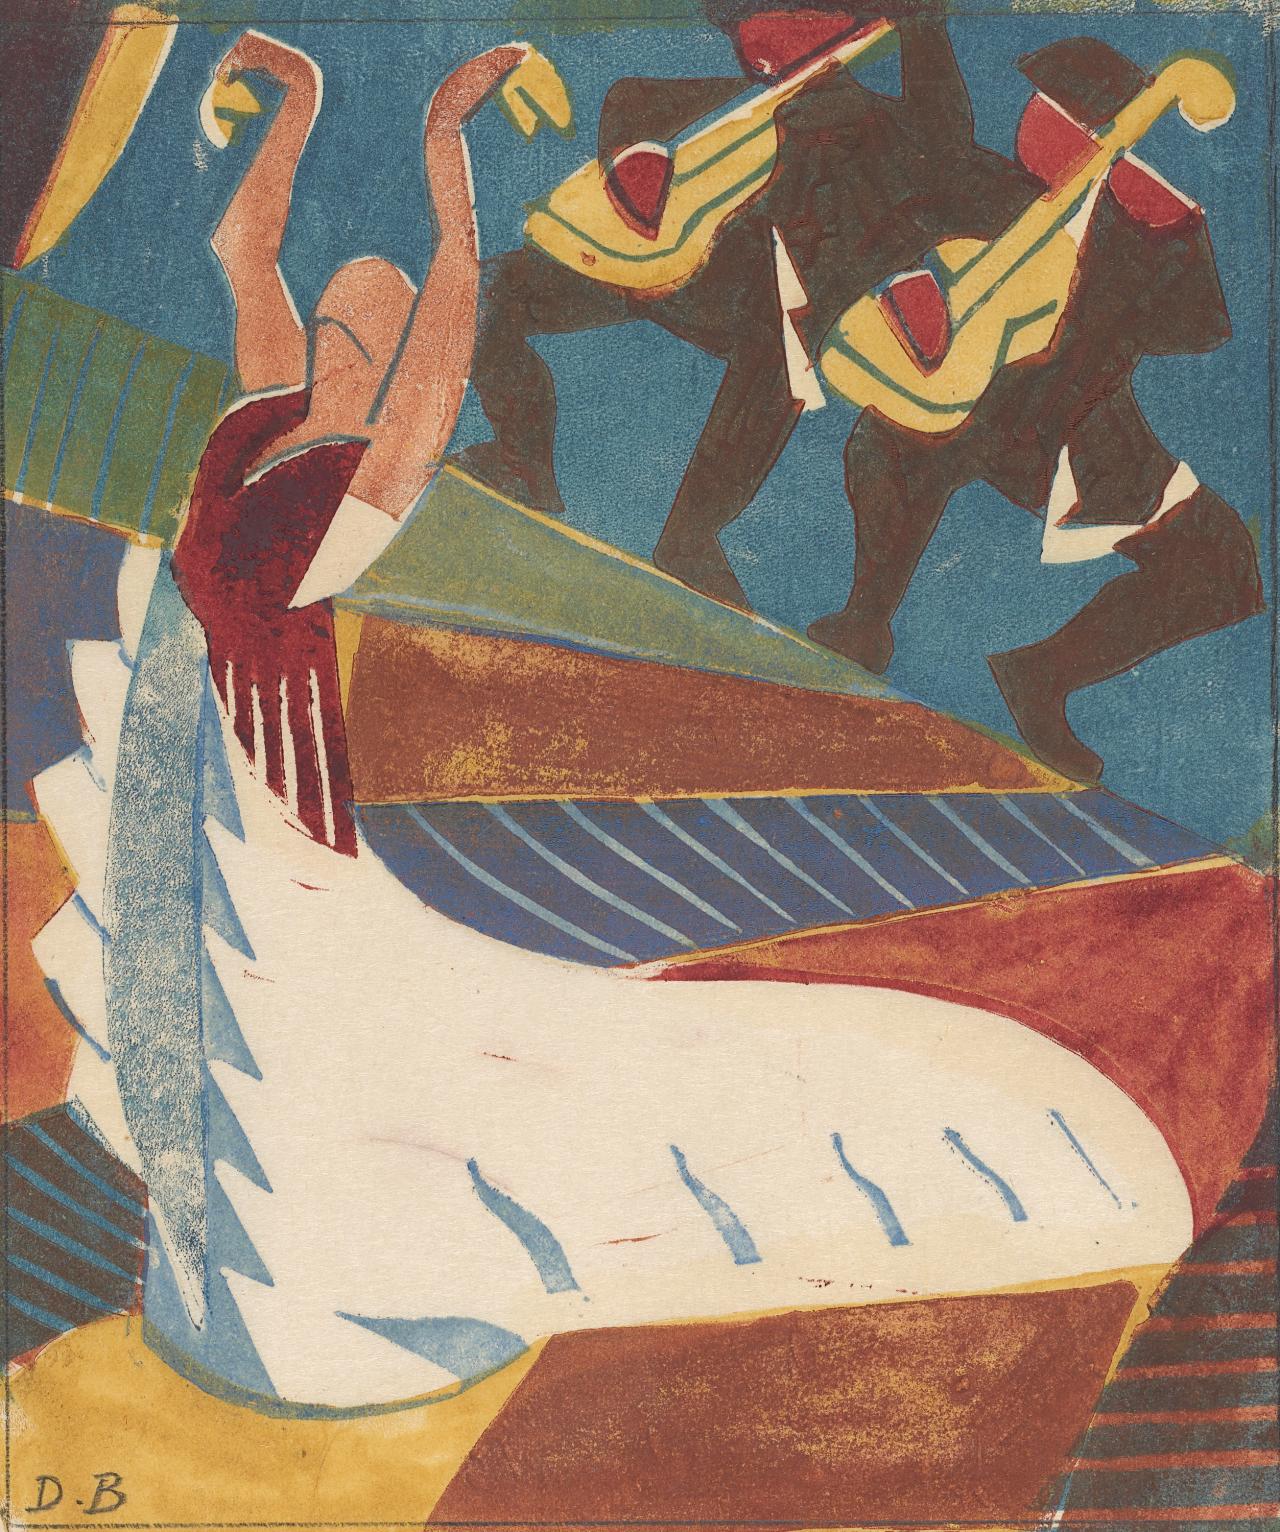 Argentyna (Hiszpańska tancerka) by Dorrit Black - ok. 1929 - 18,8 × 16 cm 